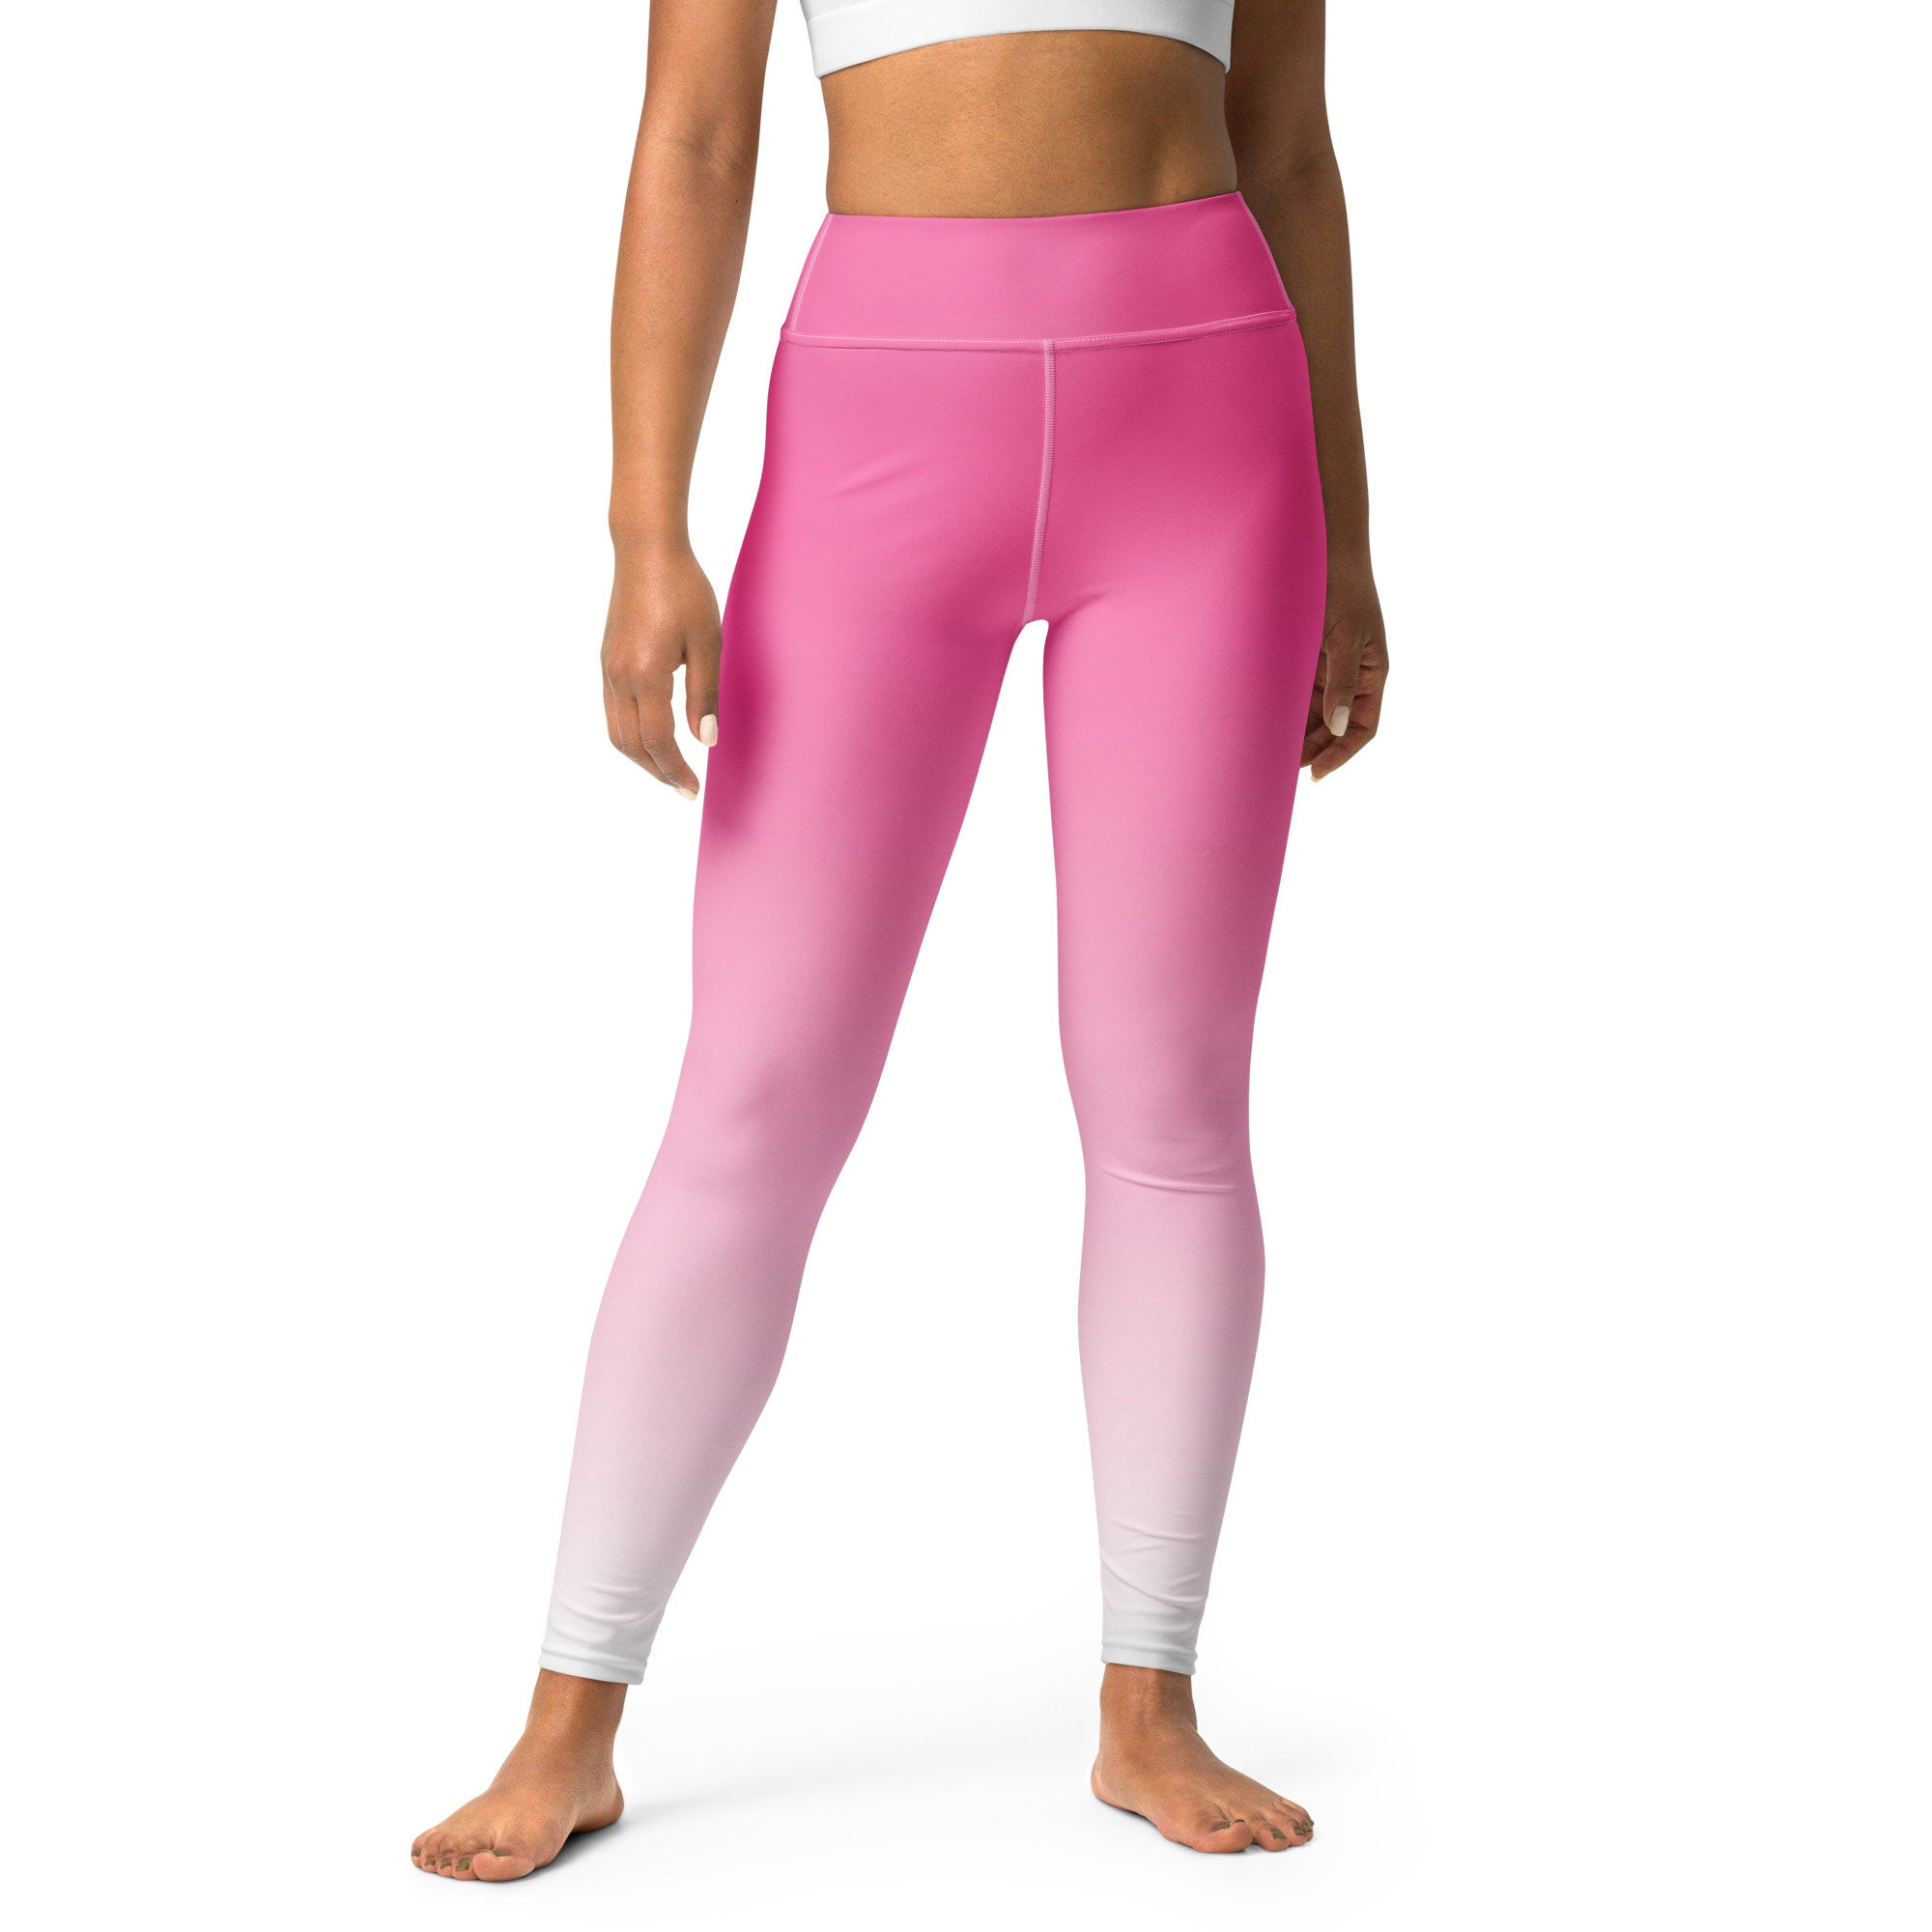 Grey White Ombre Leggings Women, Gradient Tie Dye Black Printed Yoga Pants  Cute Workout Running Gym Designer